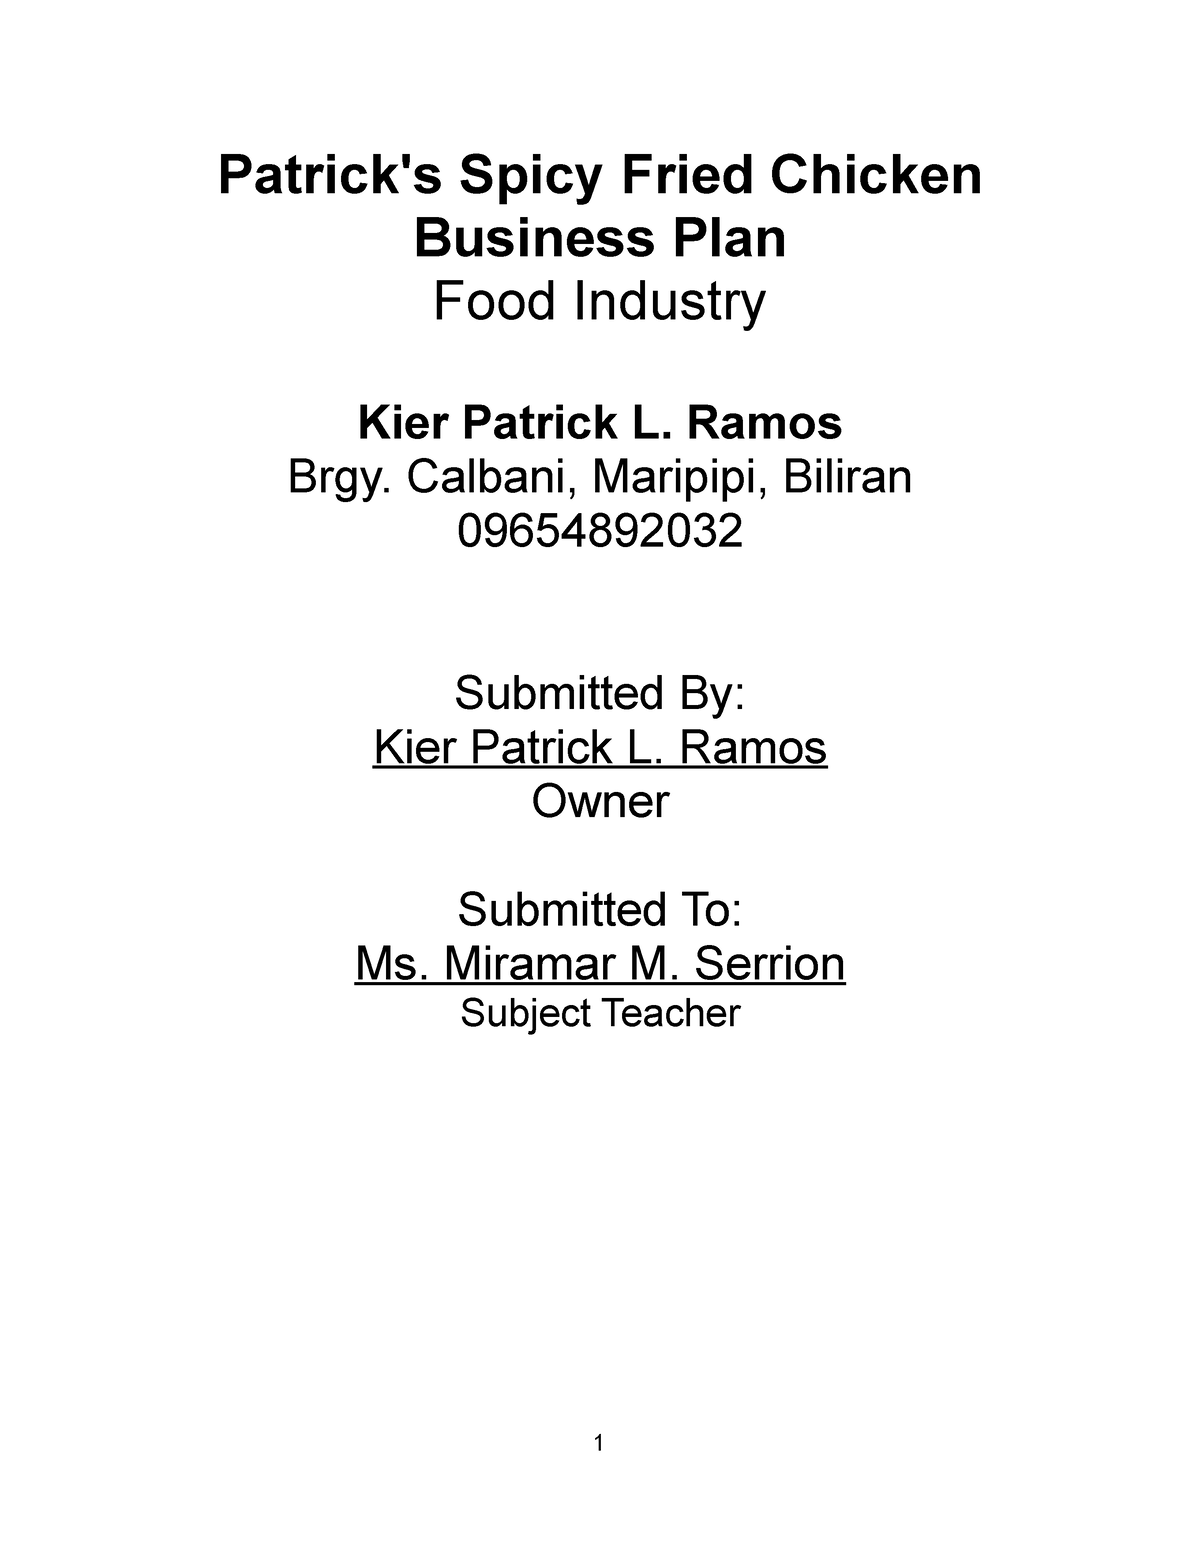 business plan food industry